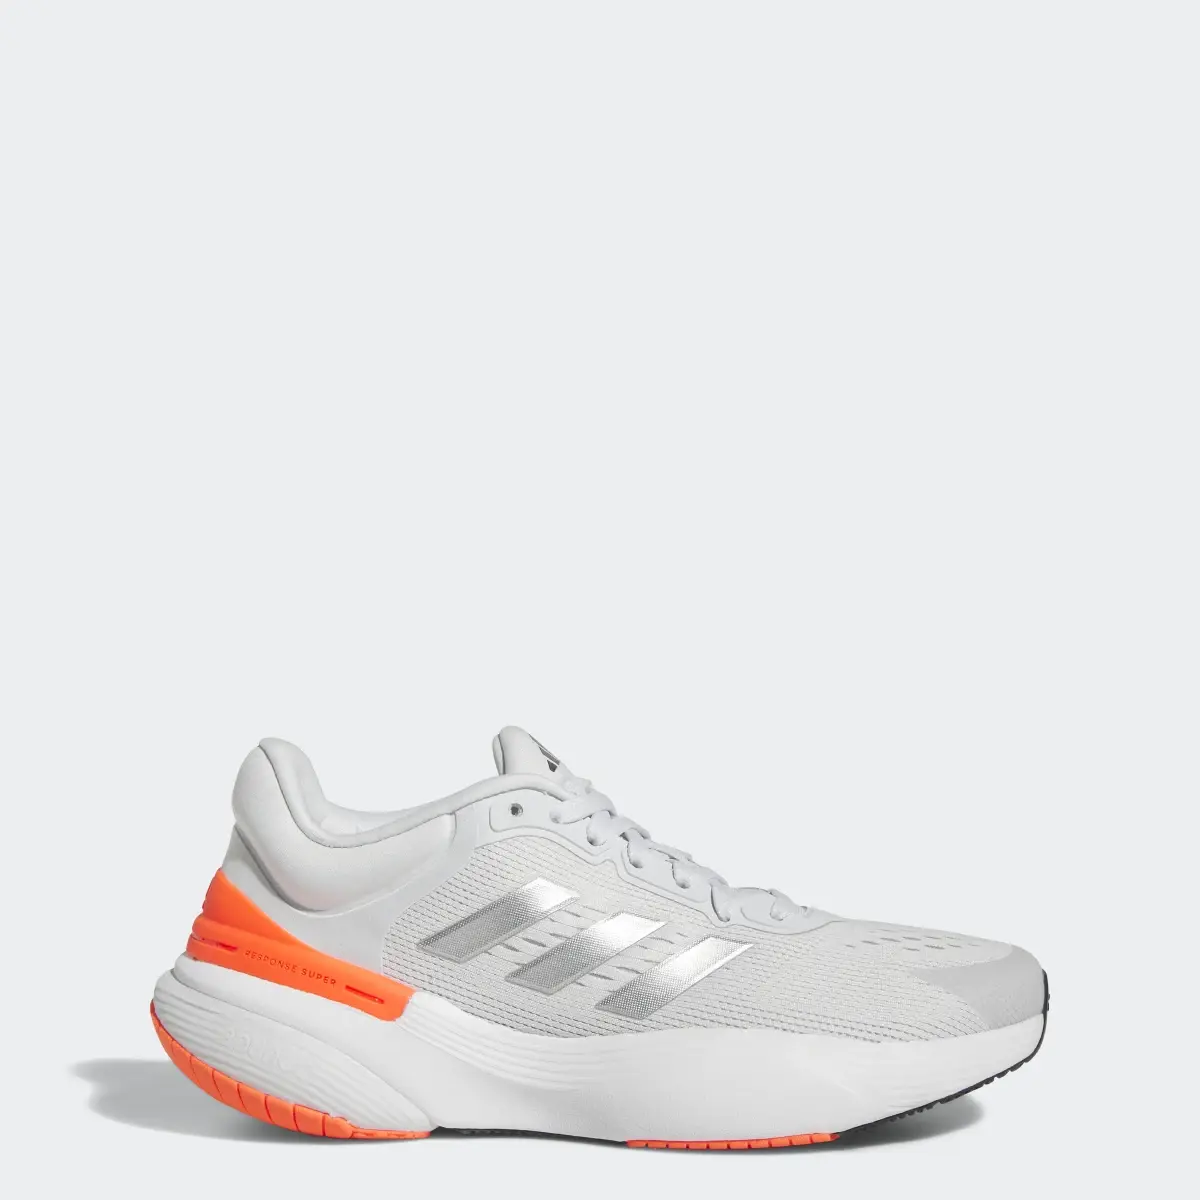 Adidas Response Super 3.0 Running Shoes. 1